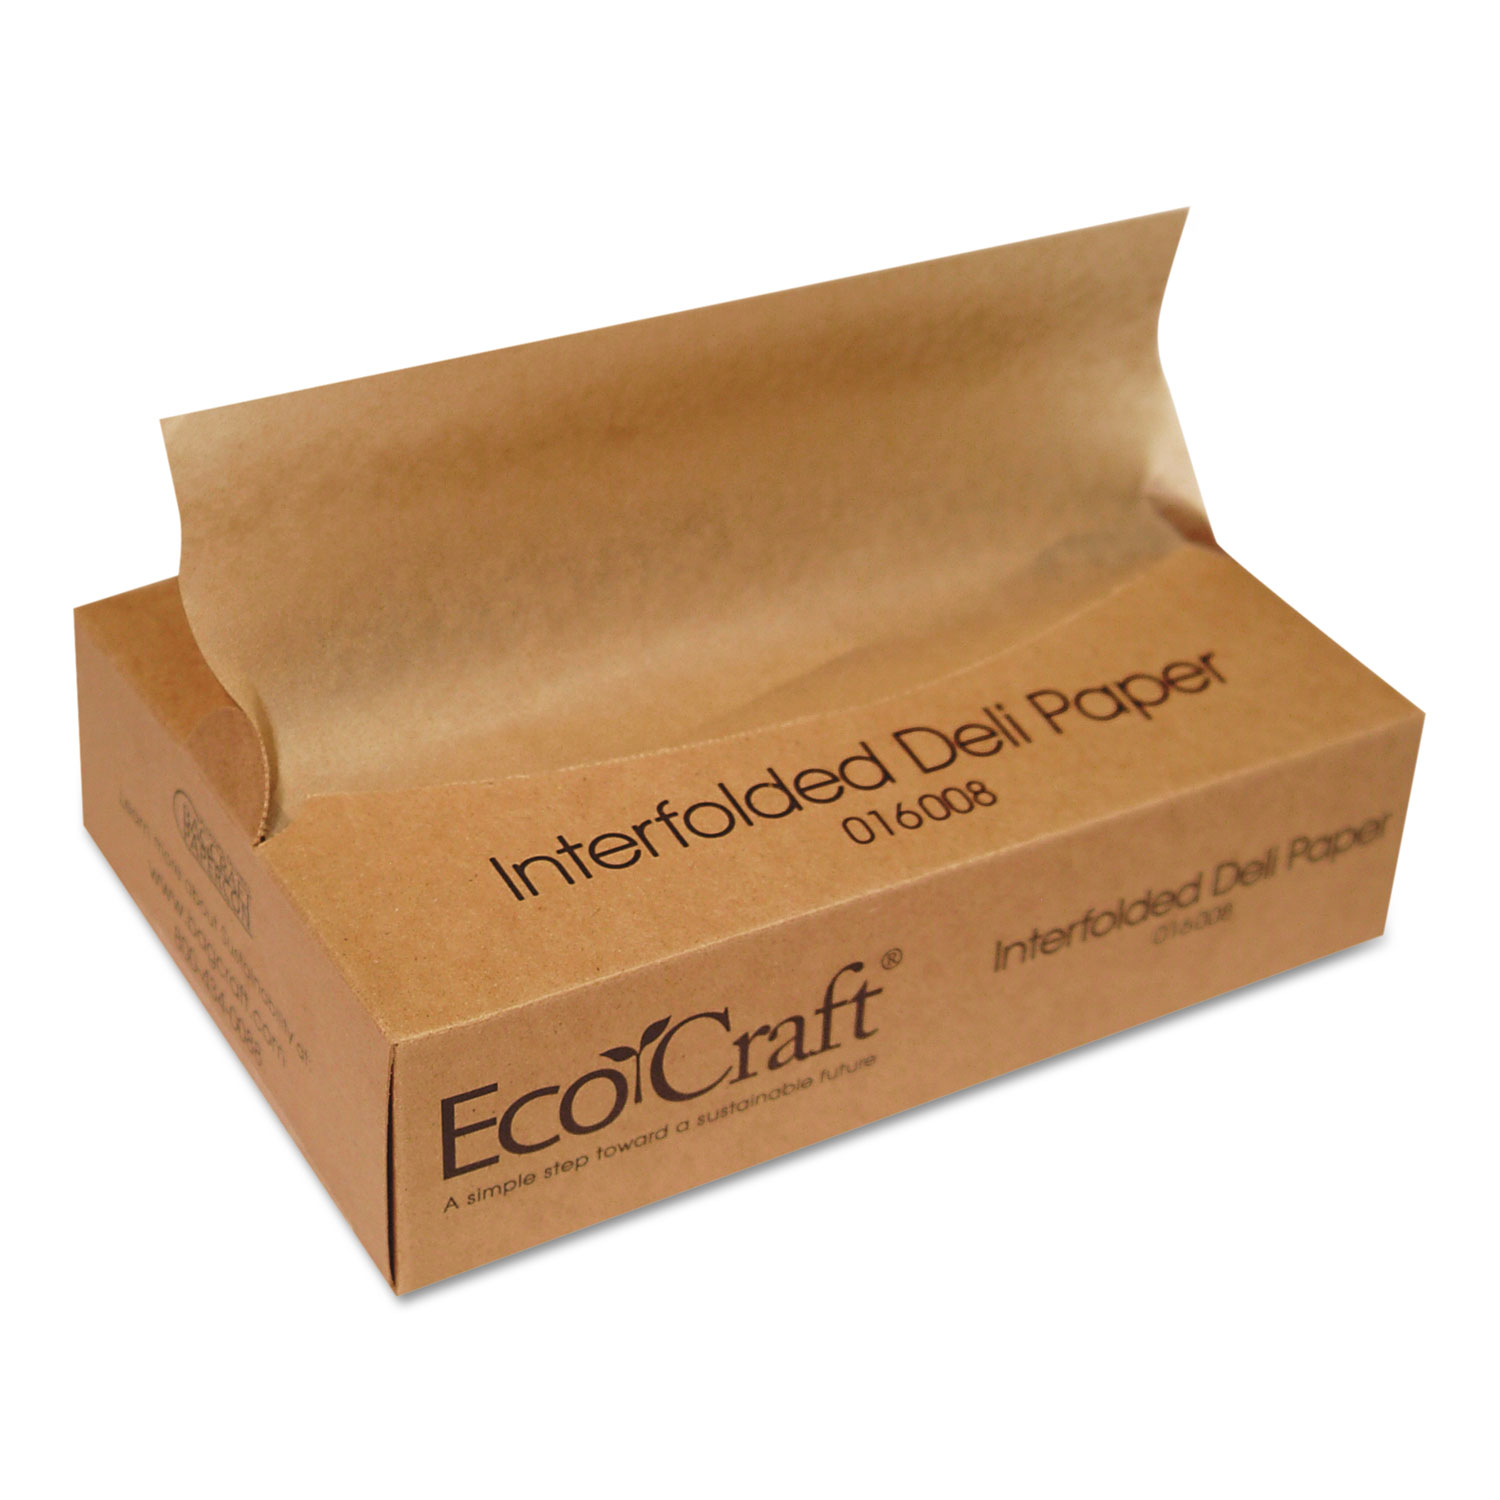  Bagcraft BGC 016008 EcoCraft Interfolded Soy Wax Deli Sheets, 8 x 10 3/4, 500/Box, 12 Boxes/Carton (BGC016008) 